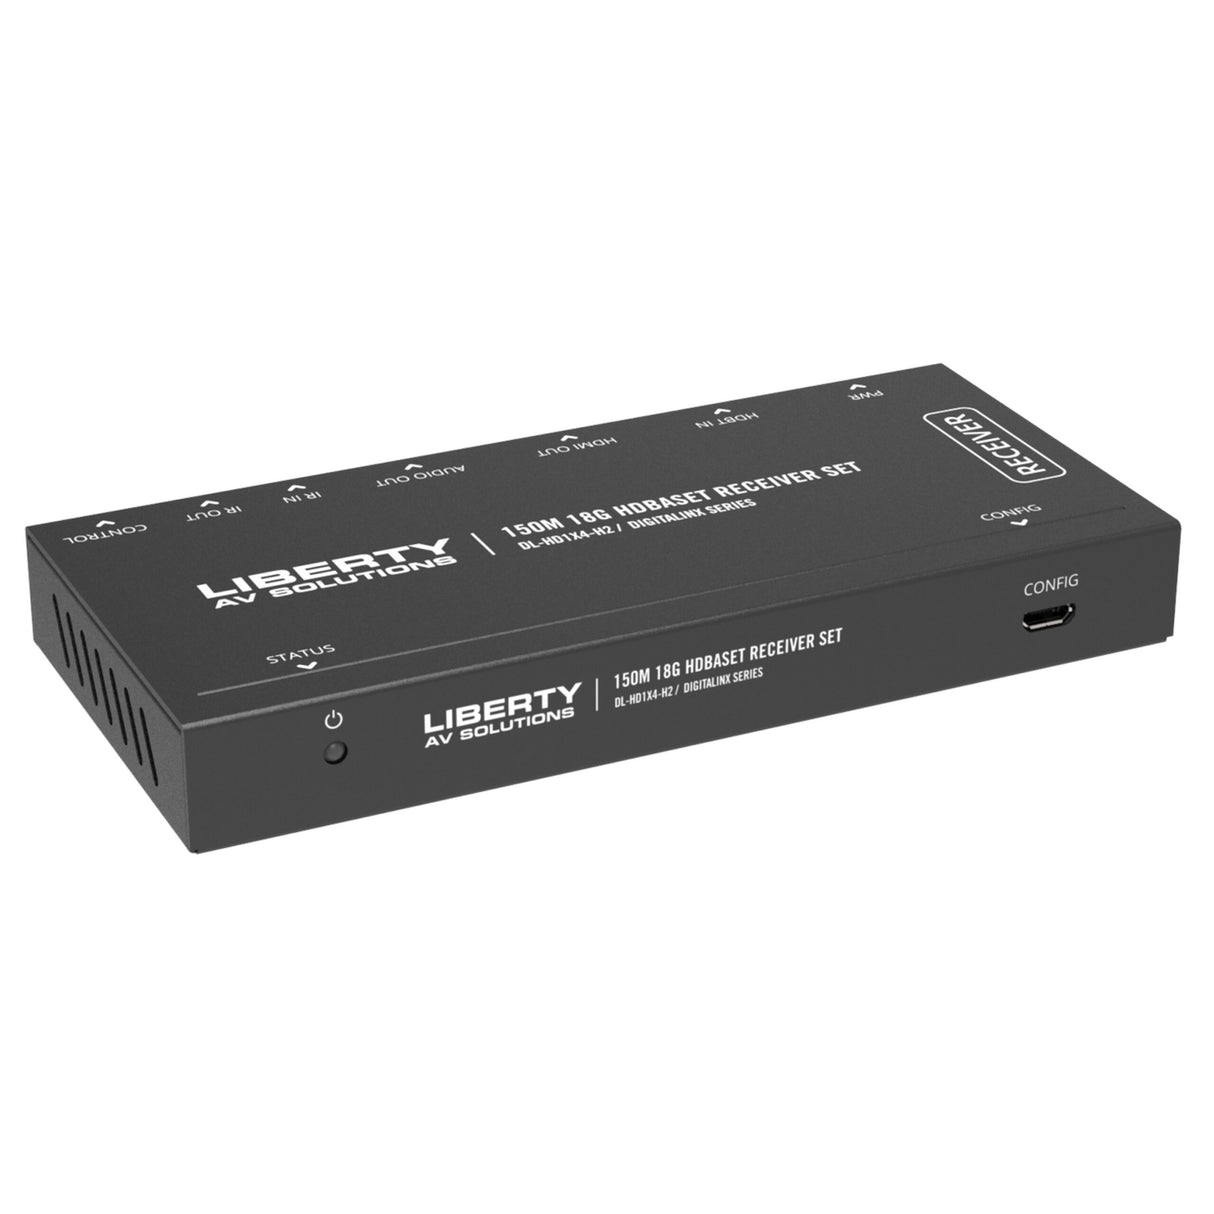 DigitaLinx DL-HD1X4-H2 4K 18G HDMI 2.0 HDBaseT Distribution Amplifier